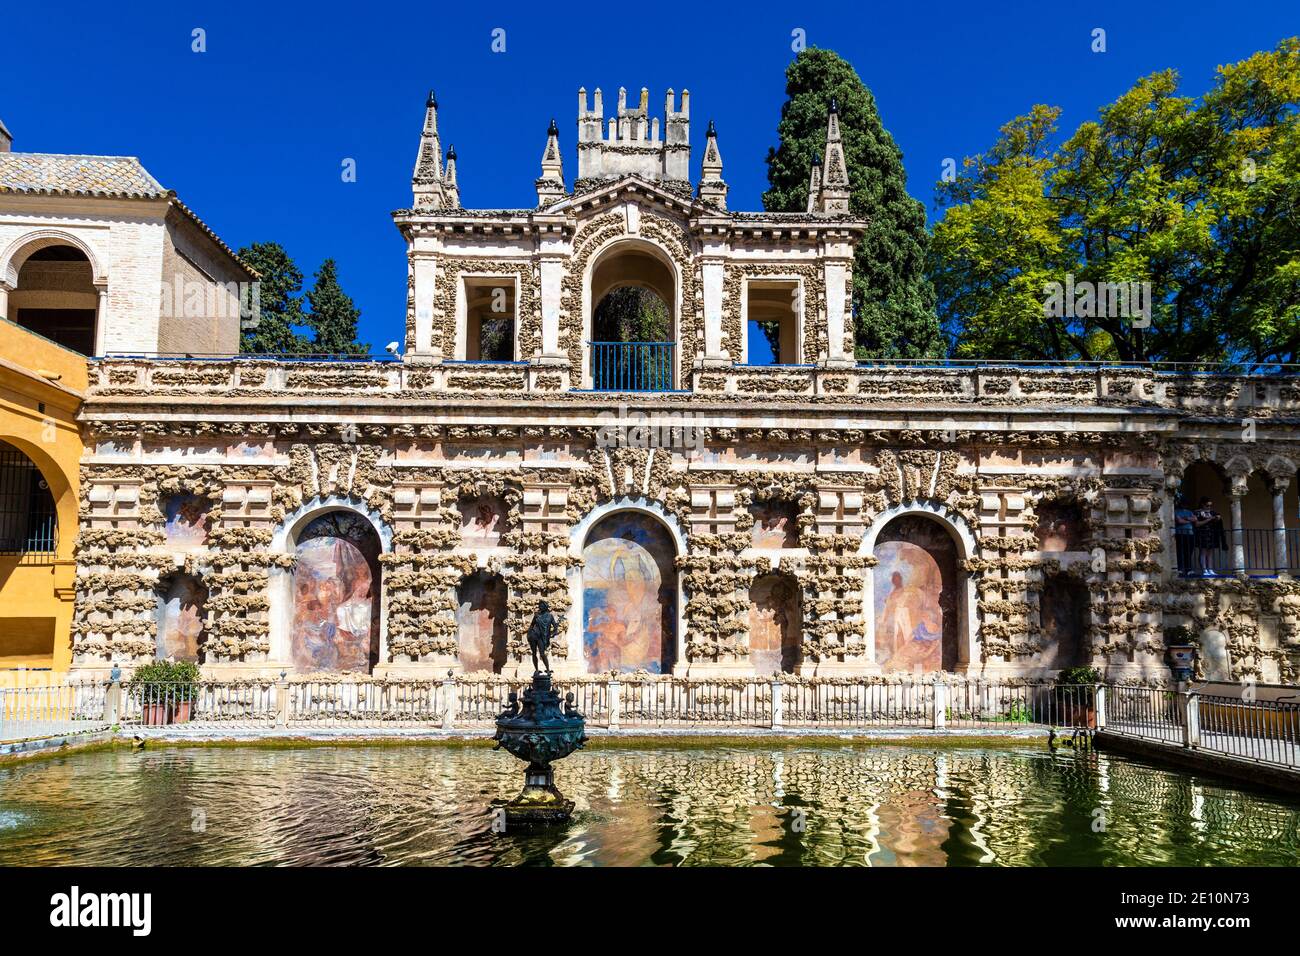 Mercury Pond Fountain and exterior of Galería del Grutesco (Grotto Gallery), Royal Alcázar of Seville, Spain Stock Photo